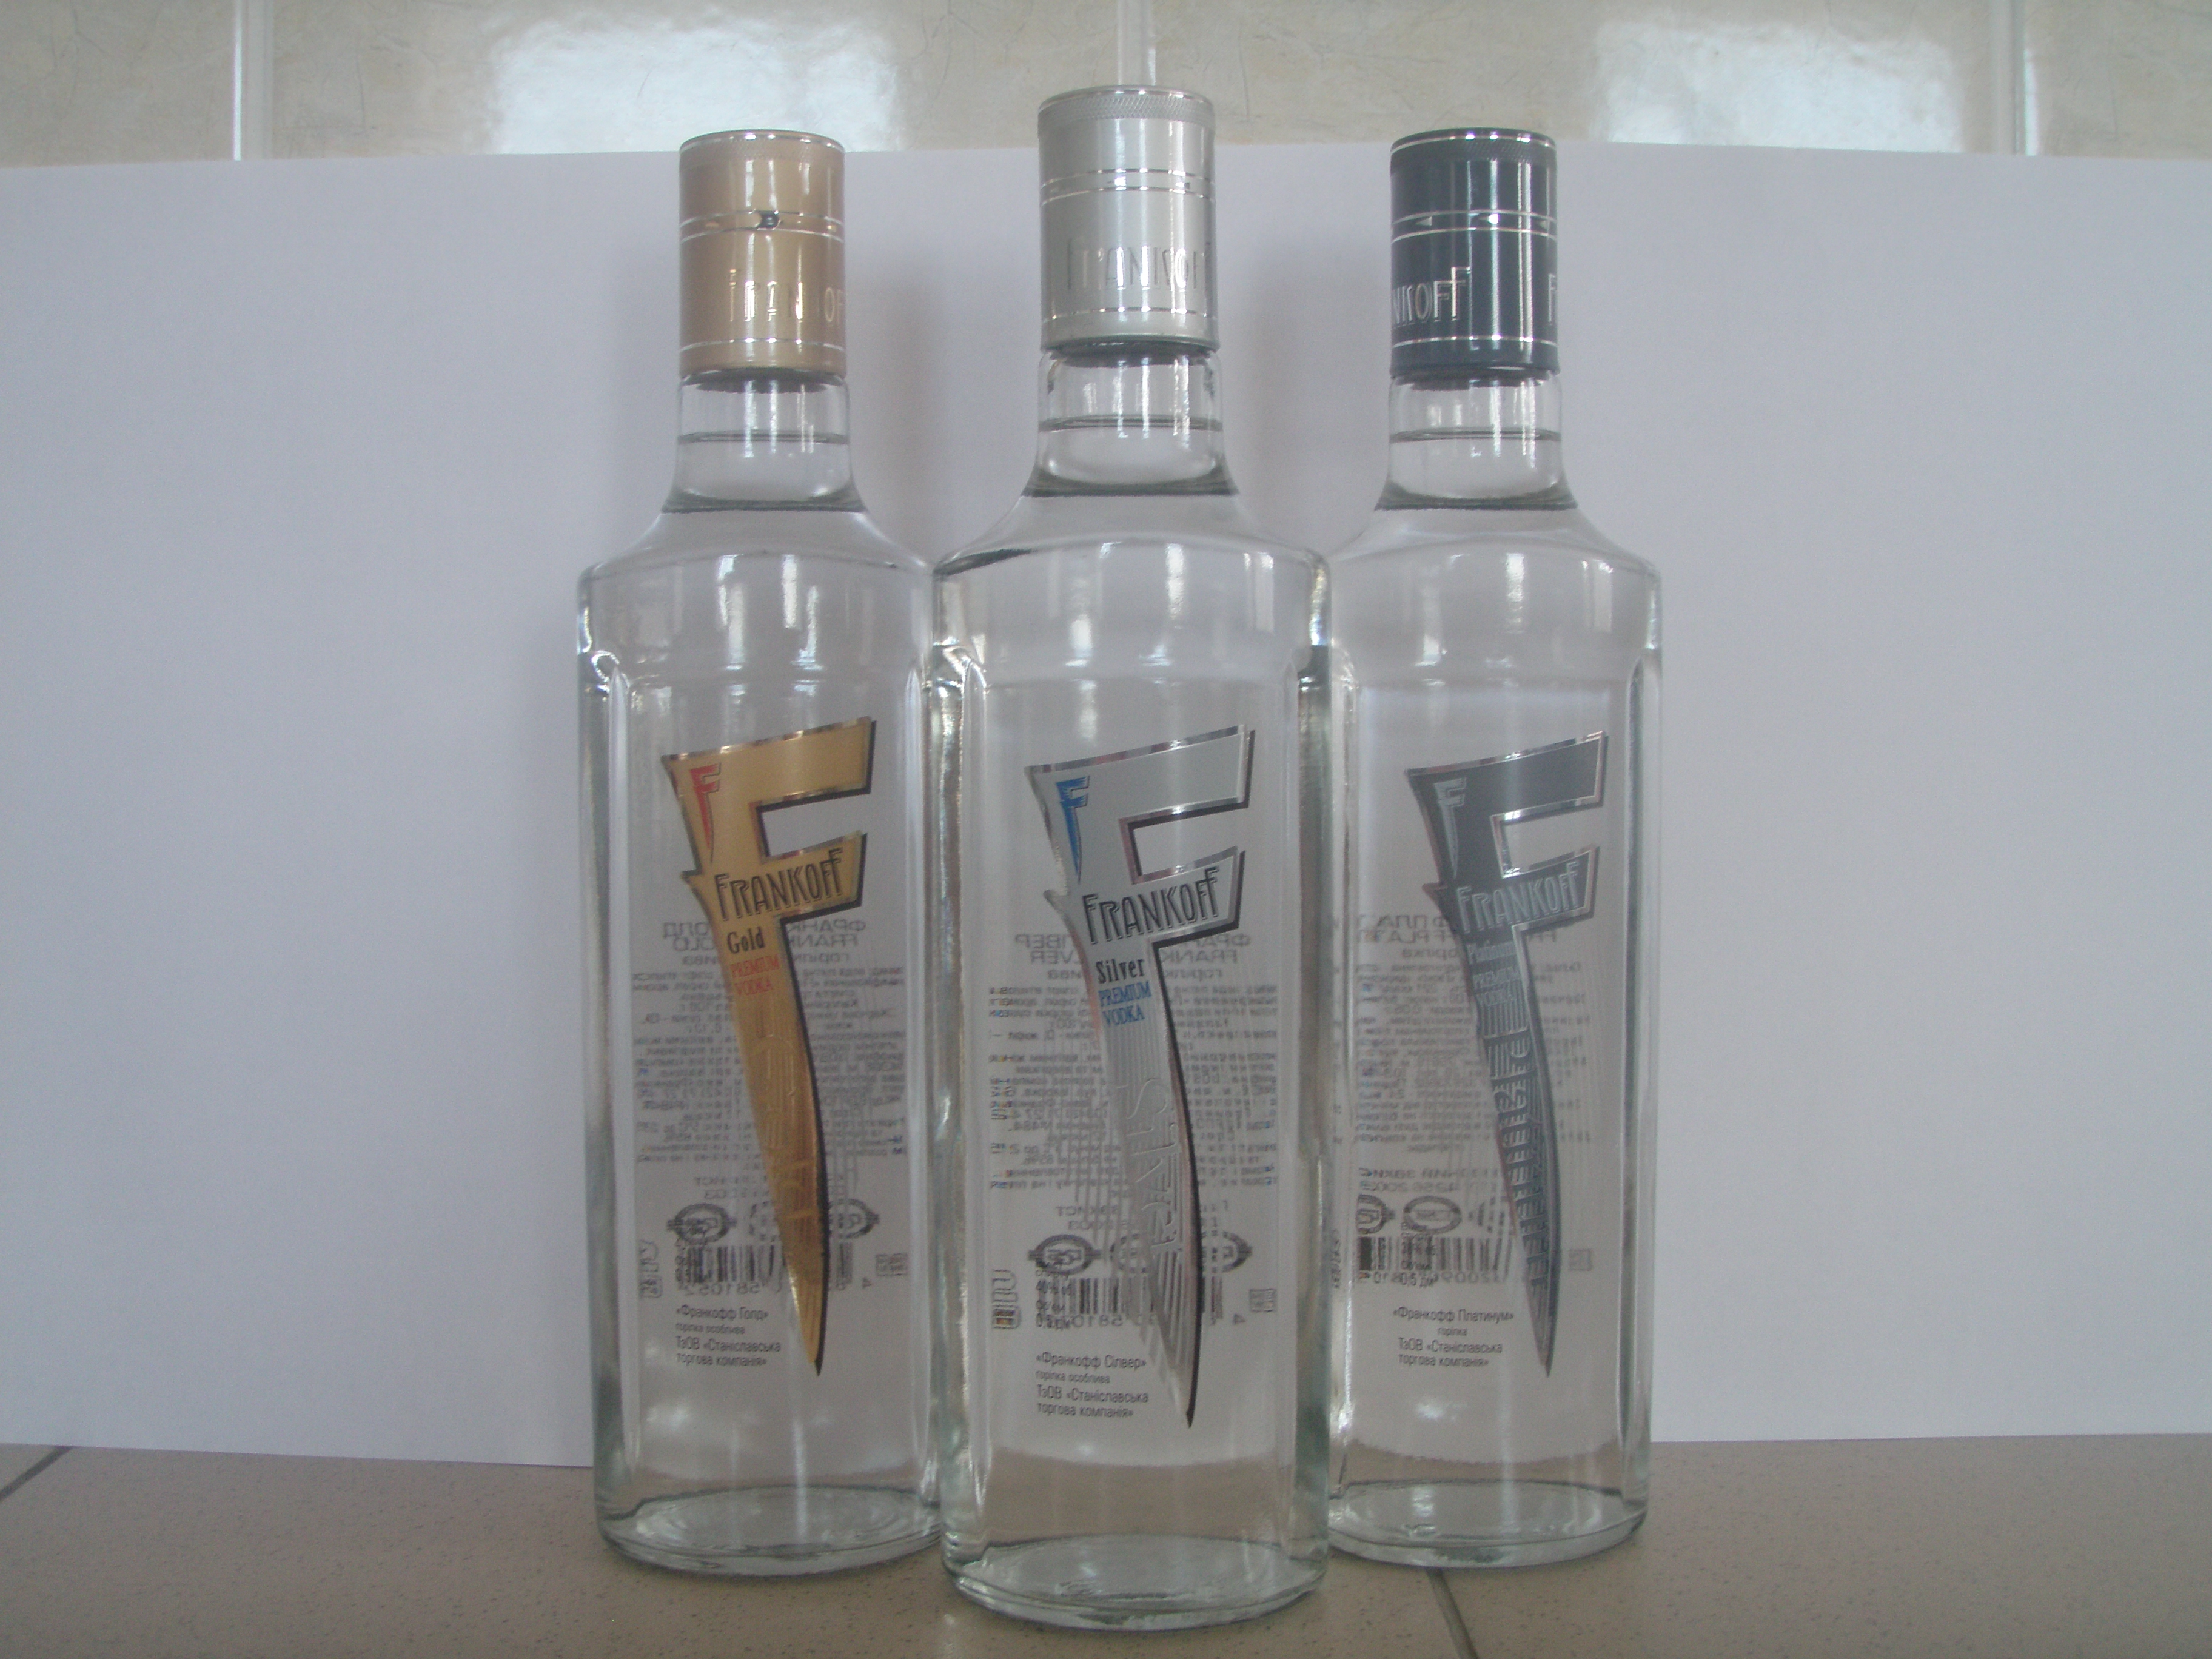 Vodka, Whiskey And Balsam-analogue ï¿½ Jï¿½germeister Liquor)) (Ukraine)